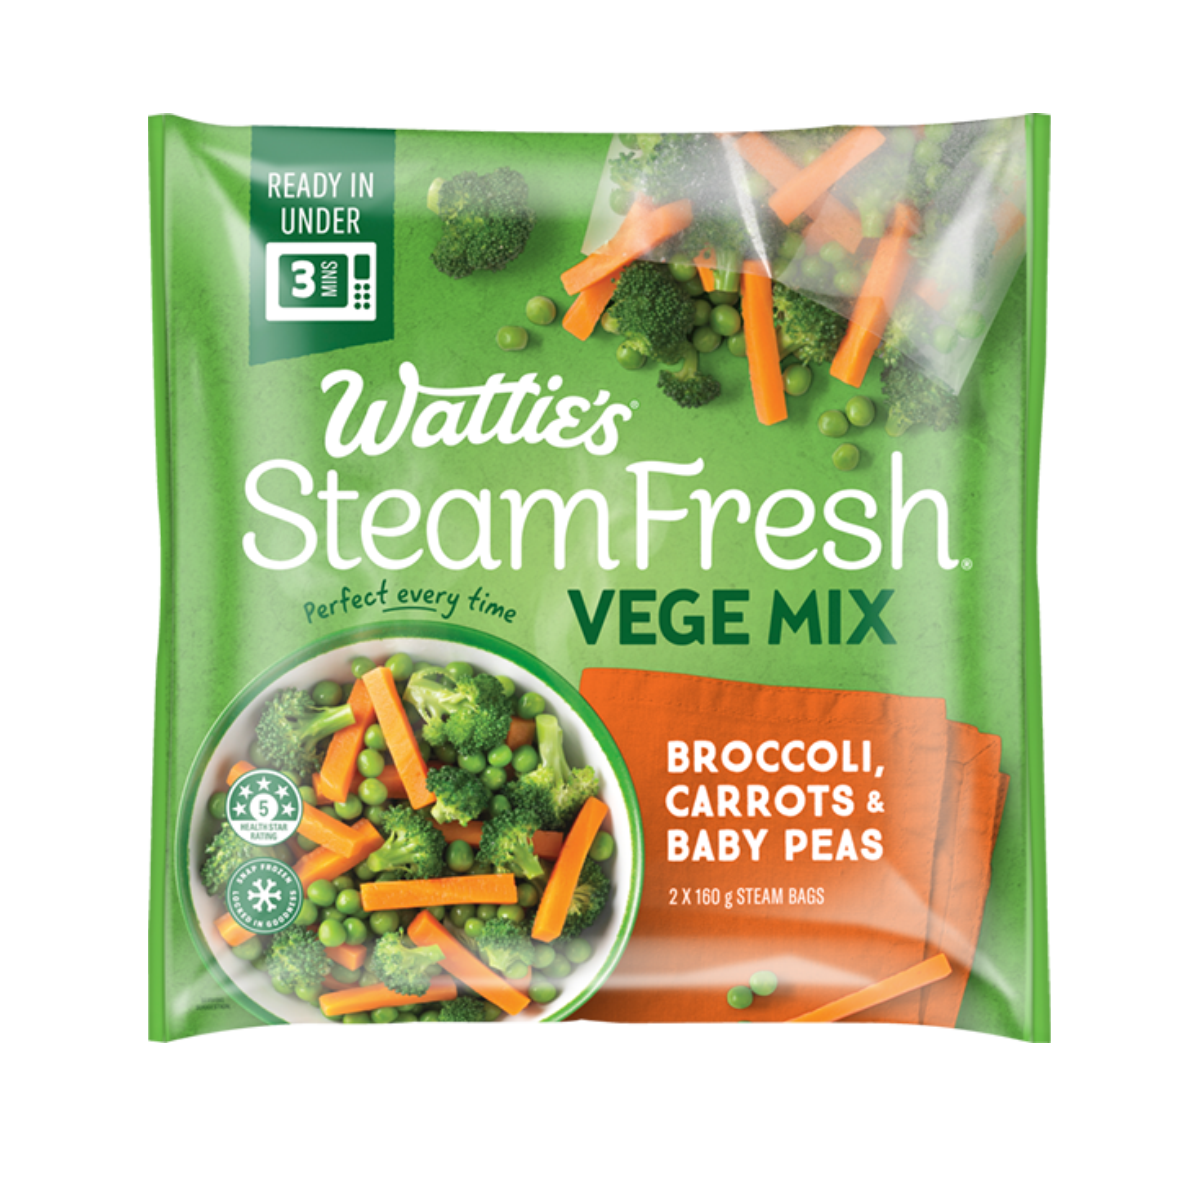 Watties Steam Fresh Veges Mix 320g [Assorted Flavors]